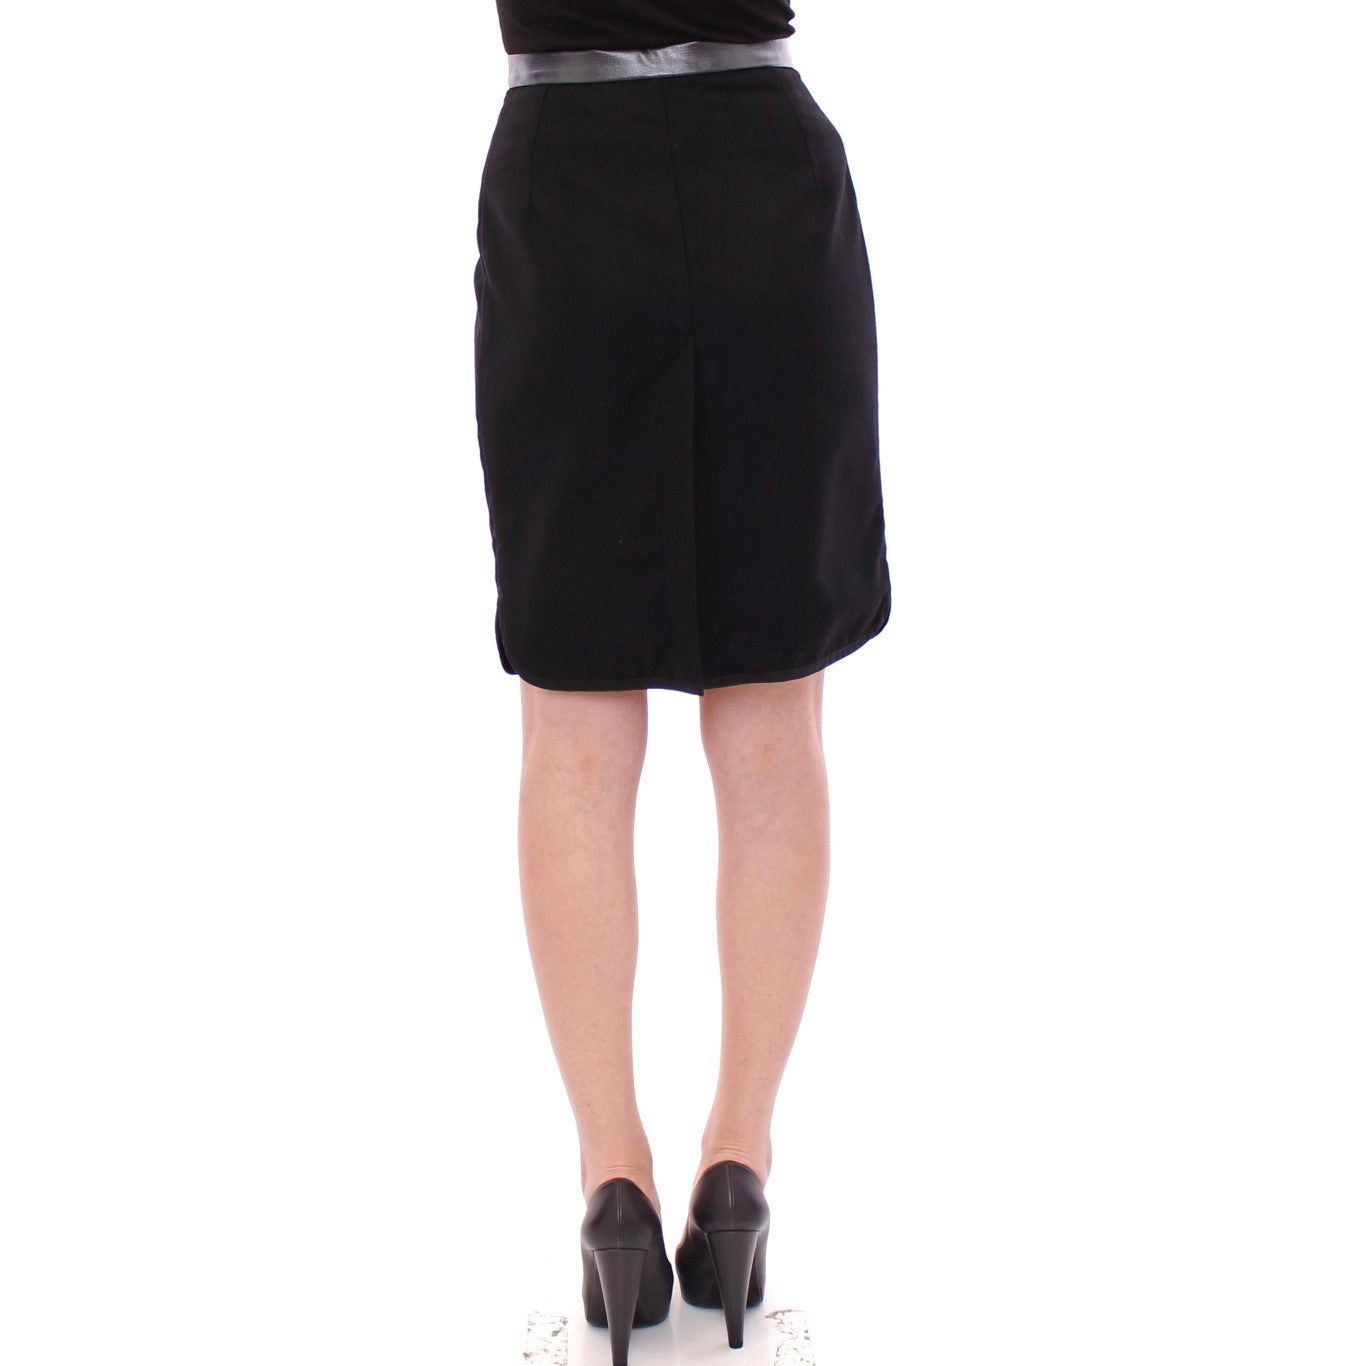 Corrado De Biase Elegant Black Wool-Cotton Blend Skirt black-metal-buttons-cotto-wool-skirt 149832-black-metal-buttons-cotto-wool-skirt-2.jpg